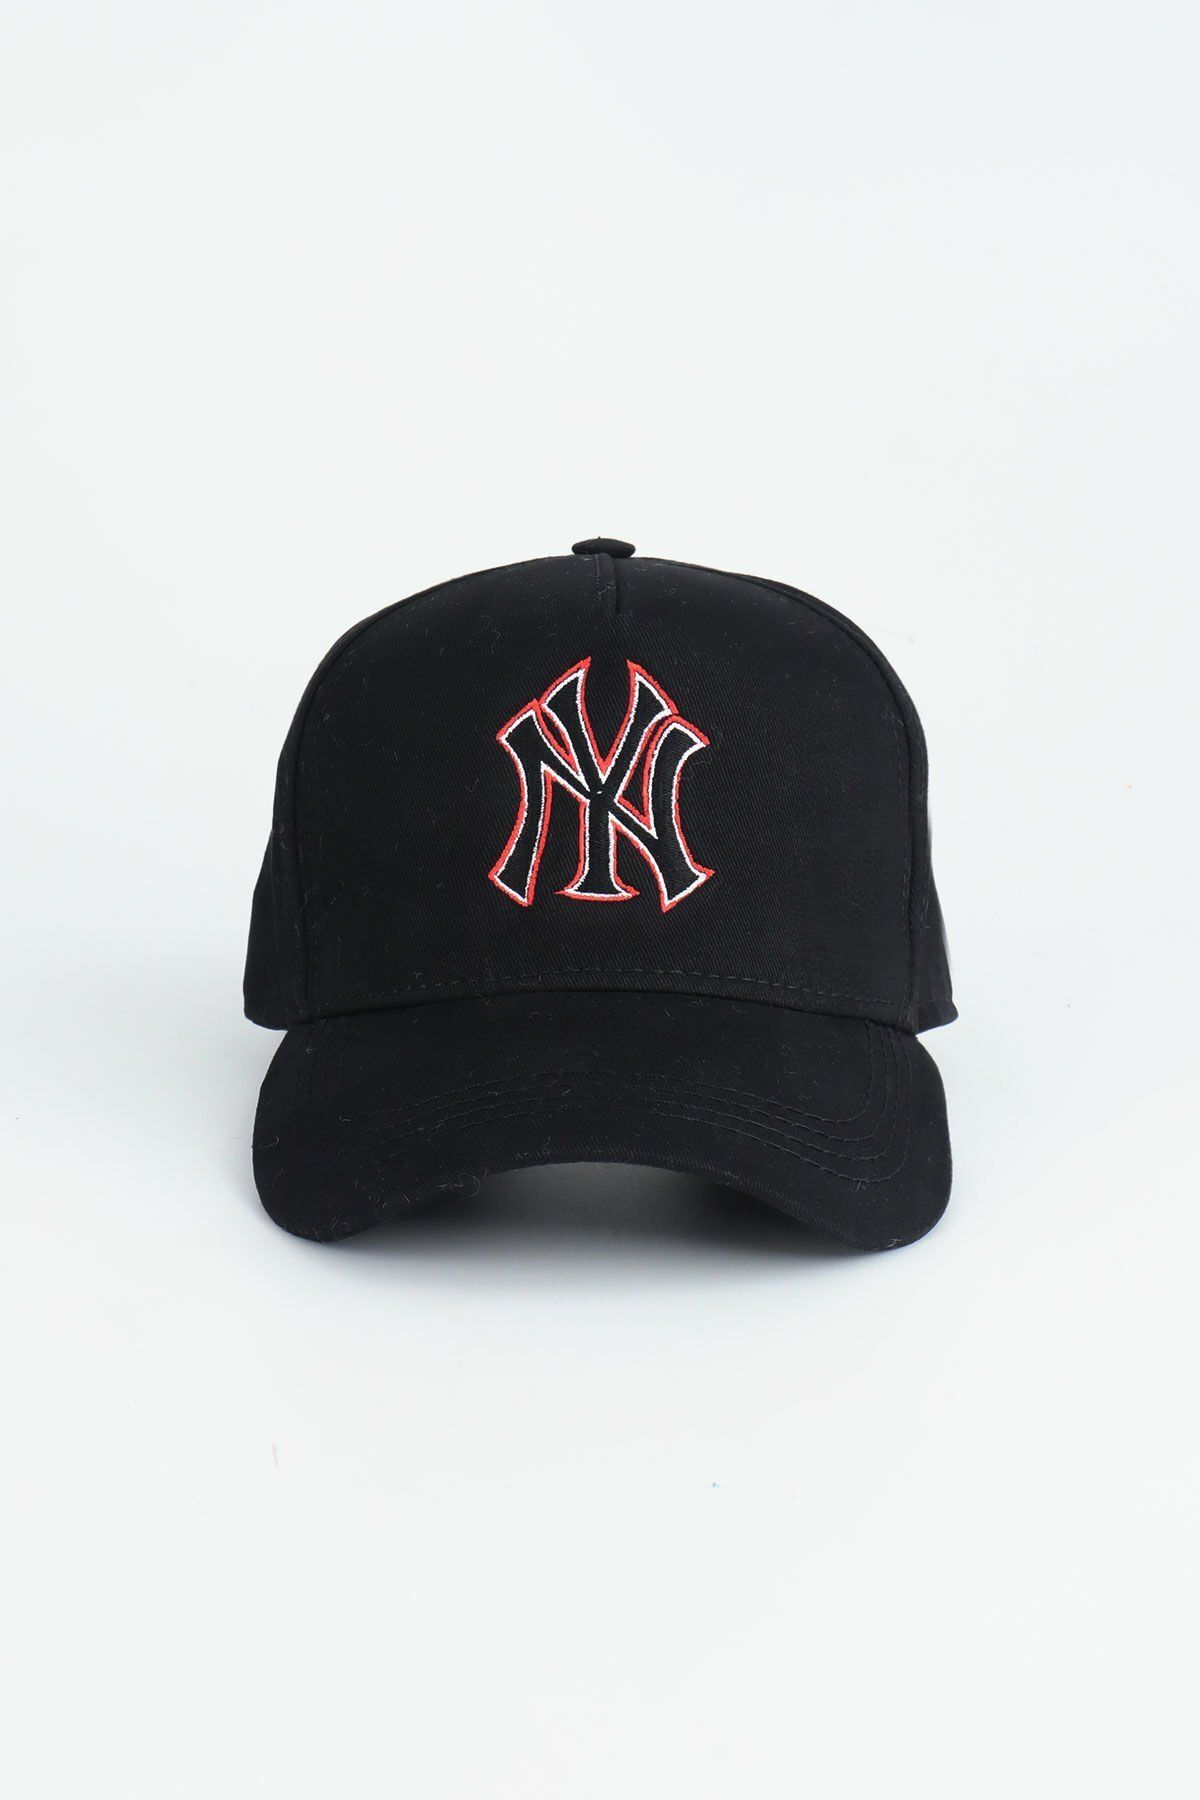 Kapin NY Siyah Kırmızı Logolu Baseball Cap Şapka - Siyah